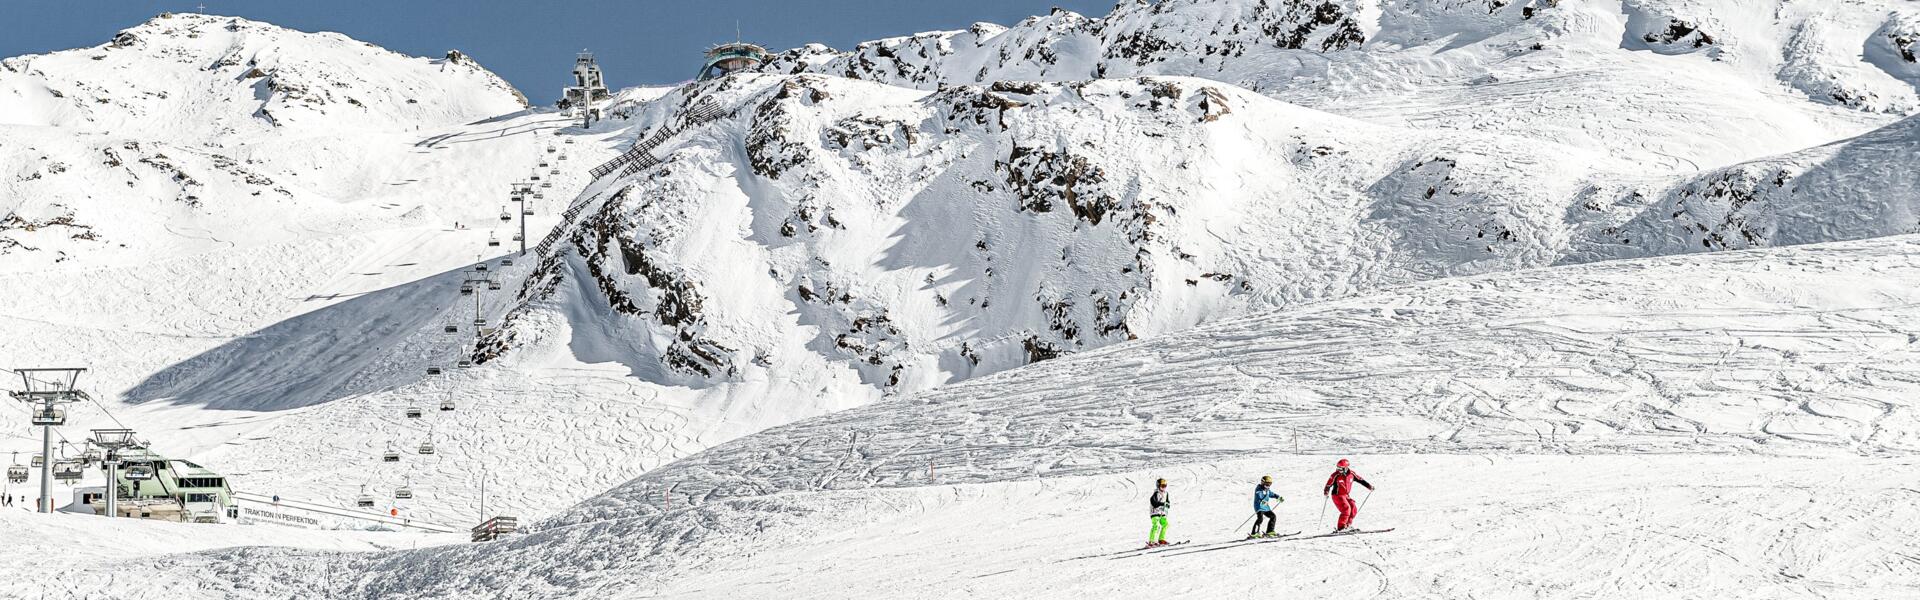 skiing obergurgl-hochgurgl   | © Alexander Maria Lohmann